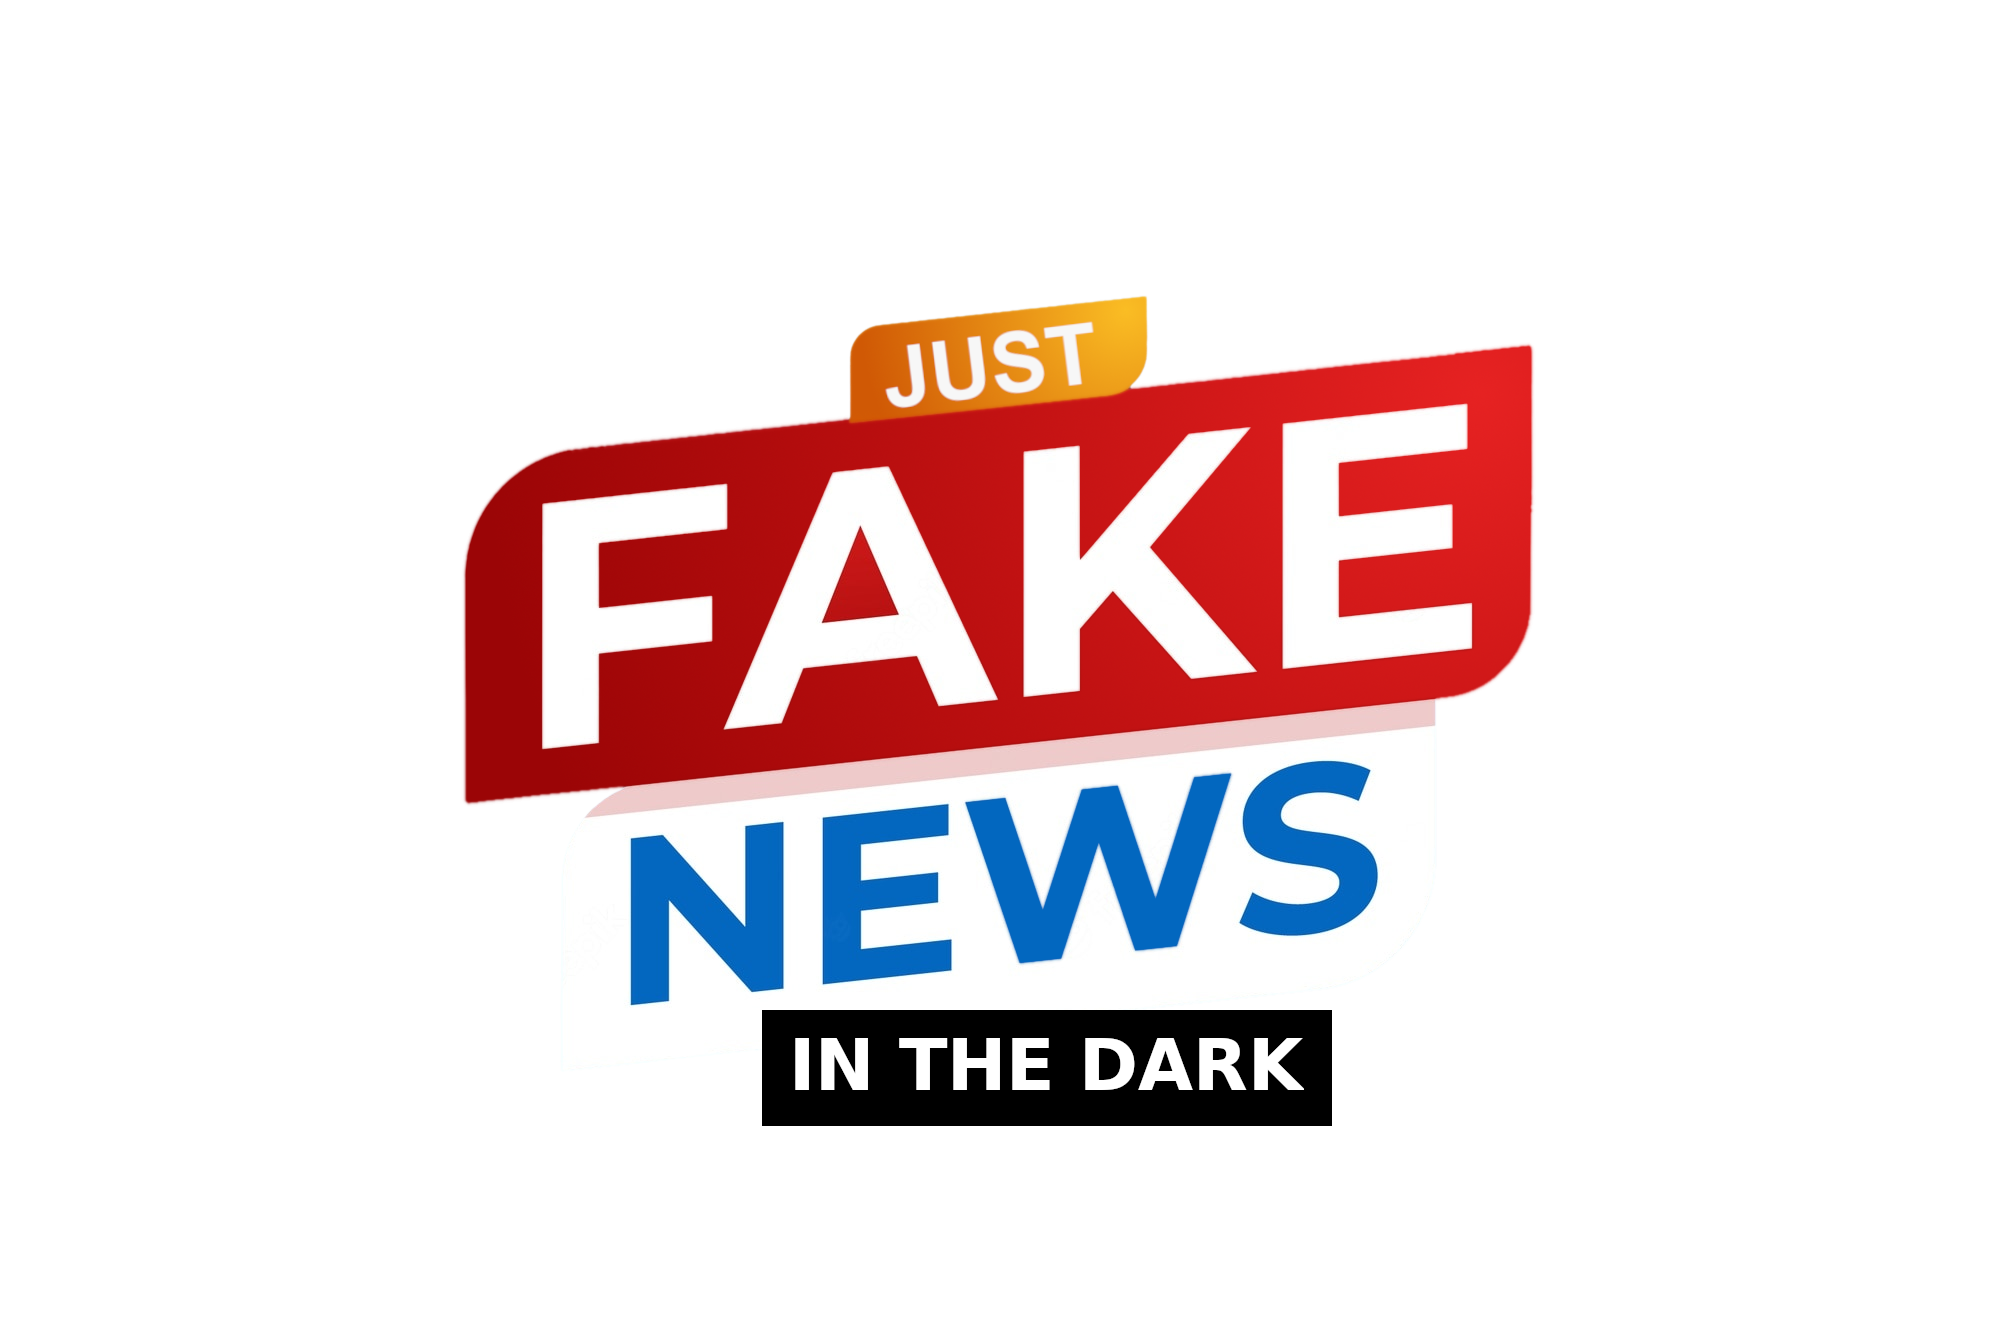 Just Fake News